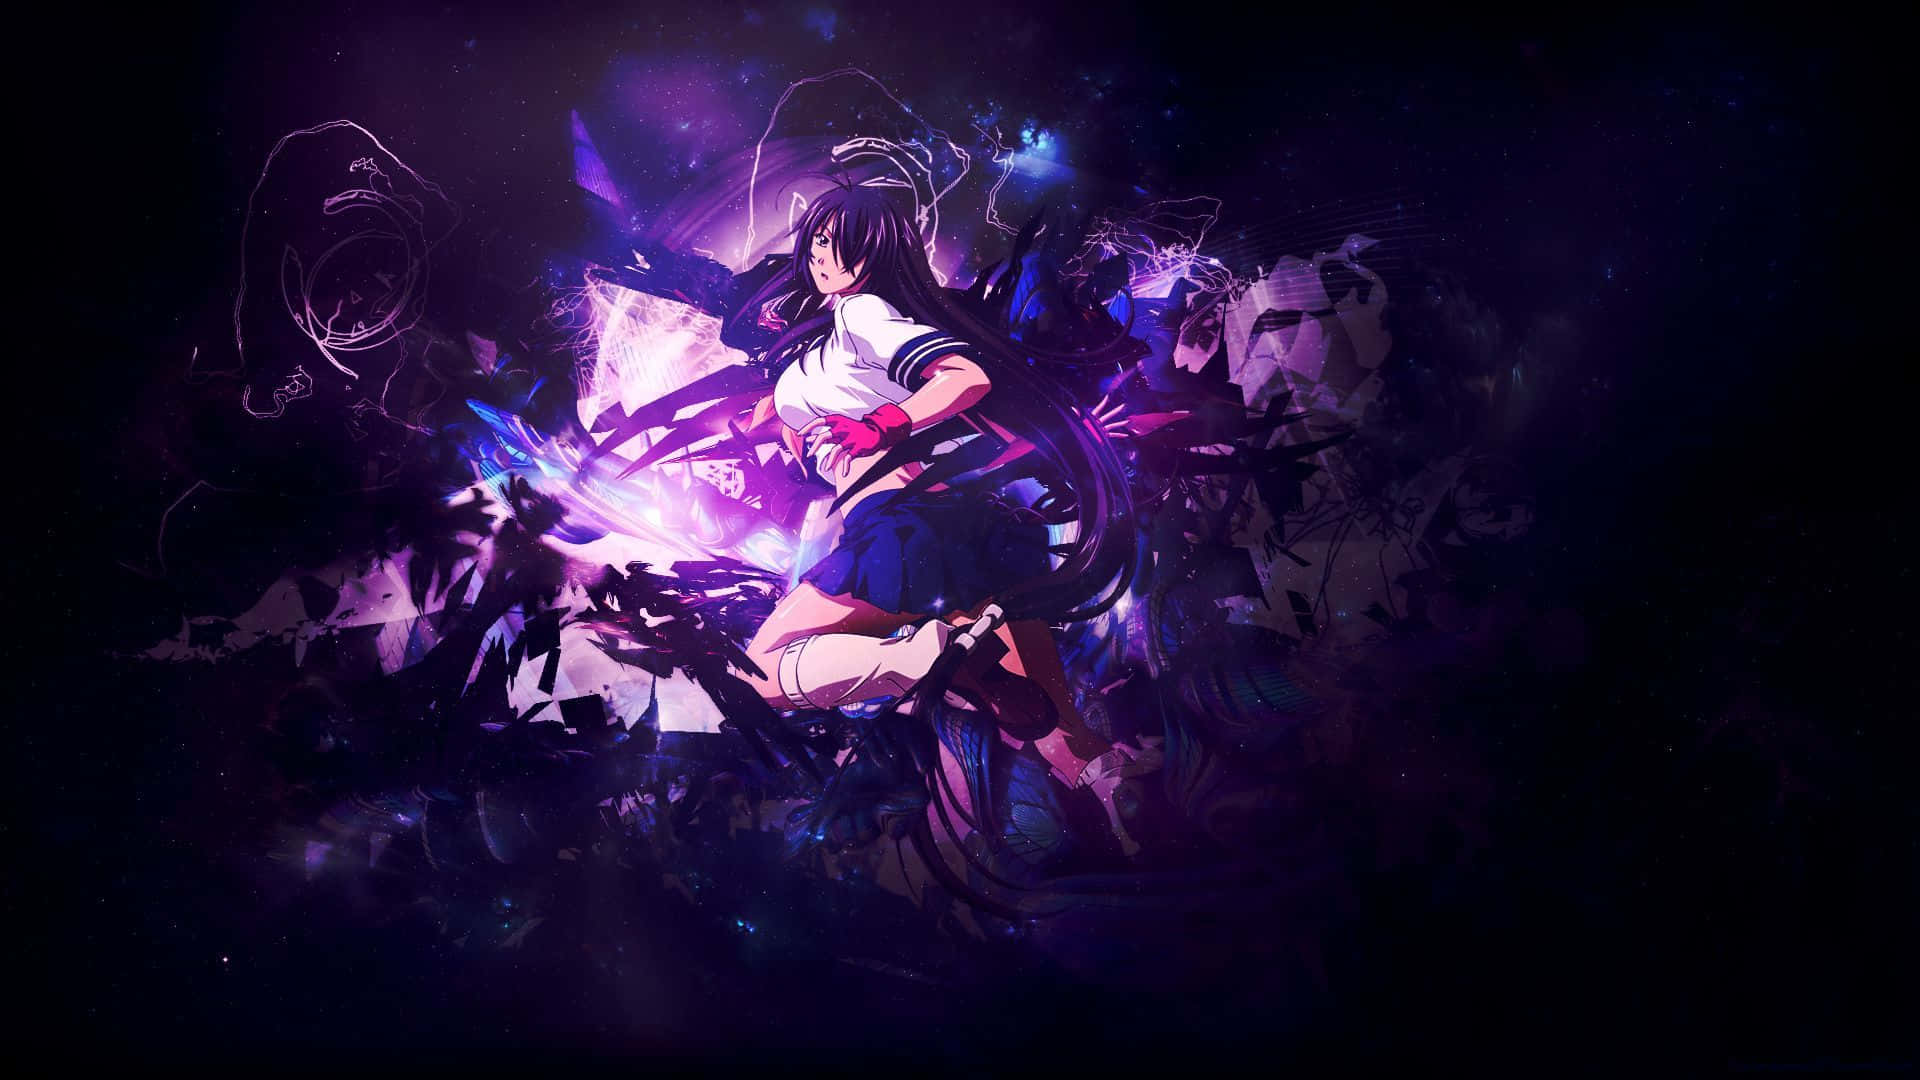 A breathtaking scene of a fantastical purple anime world